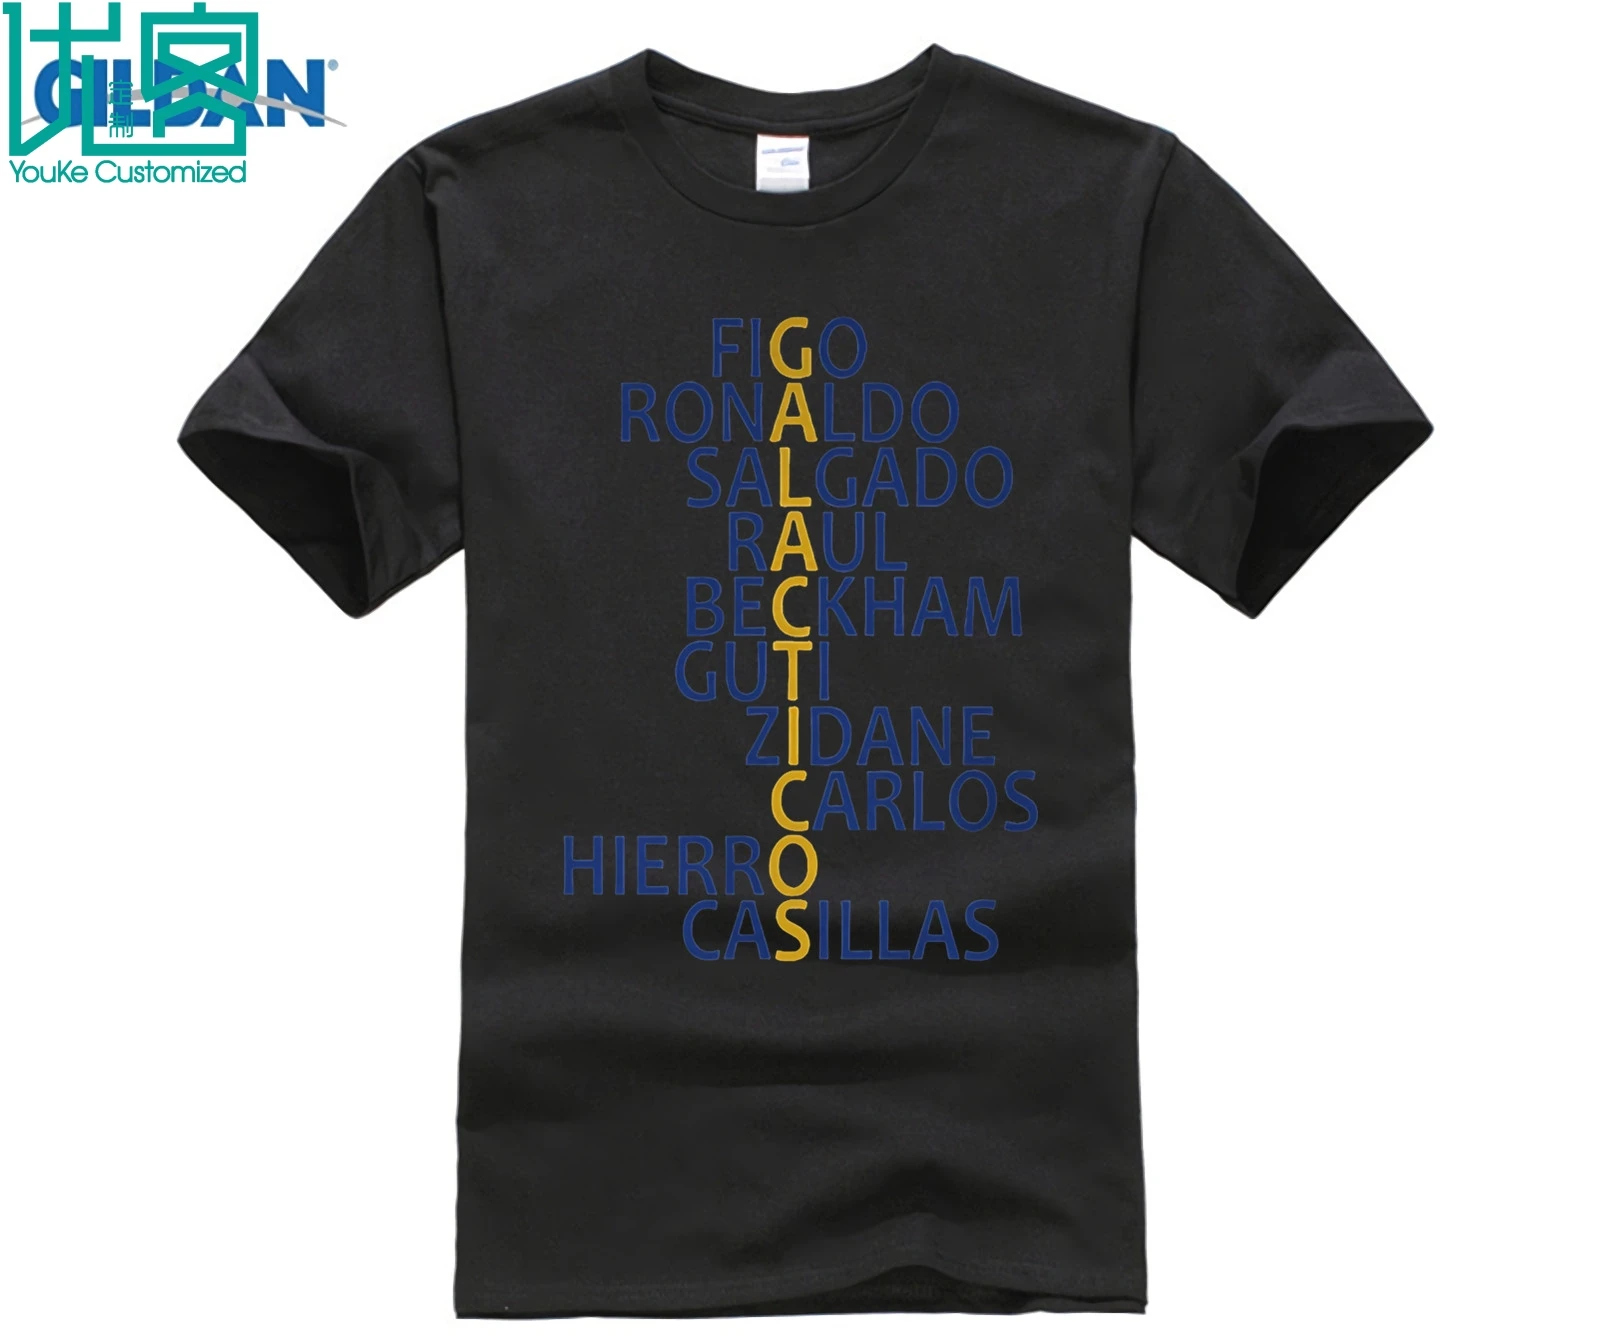 

Hot madrid retro crossword tee T Shirt figo beckham guti zidane carlos casillas real T-shirts for ronaldo raul fans